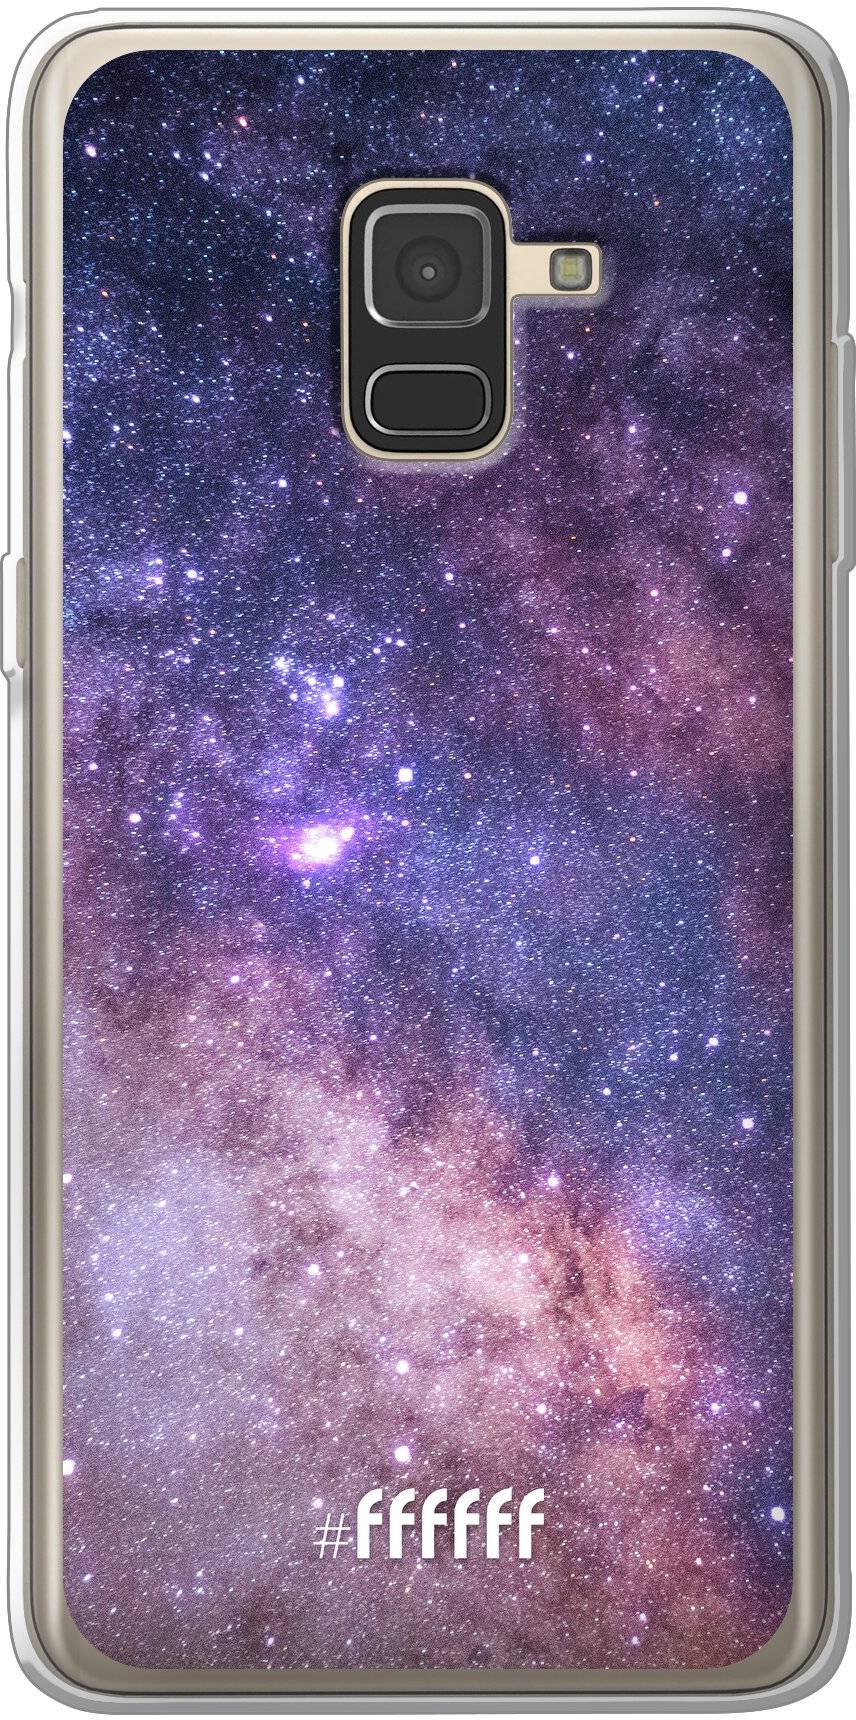 Geaccepteerd praktijk Momentum Galaxy Stars (Samsung Galaxy A8 (2018)) #ffffff telefoonhoesje • 6F